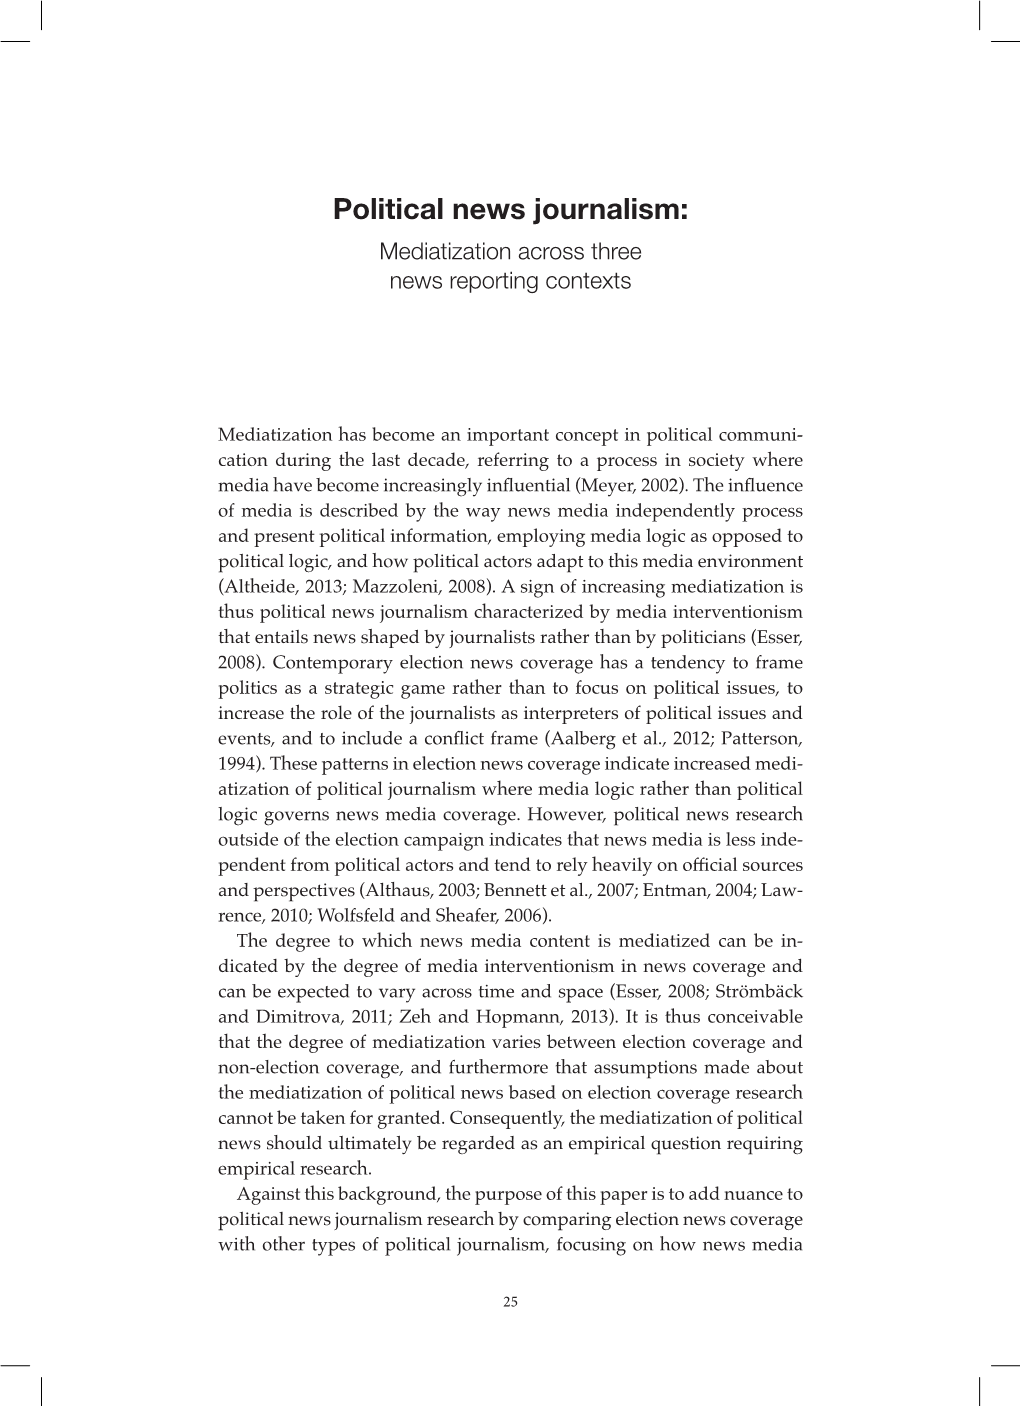 Political News Journalism: Mediatization Across Three News Reporting Contexts